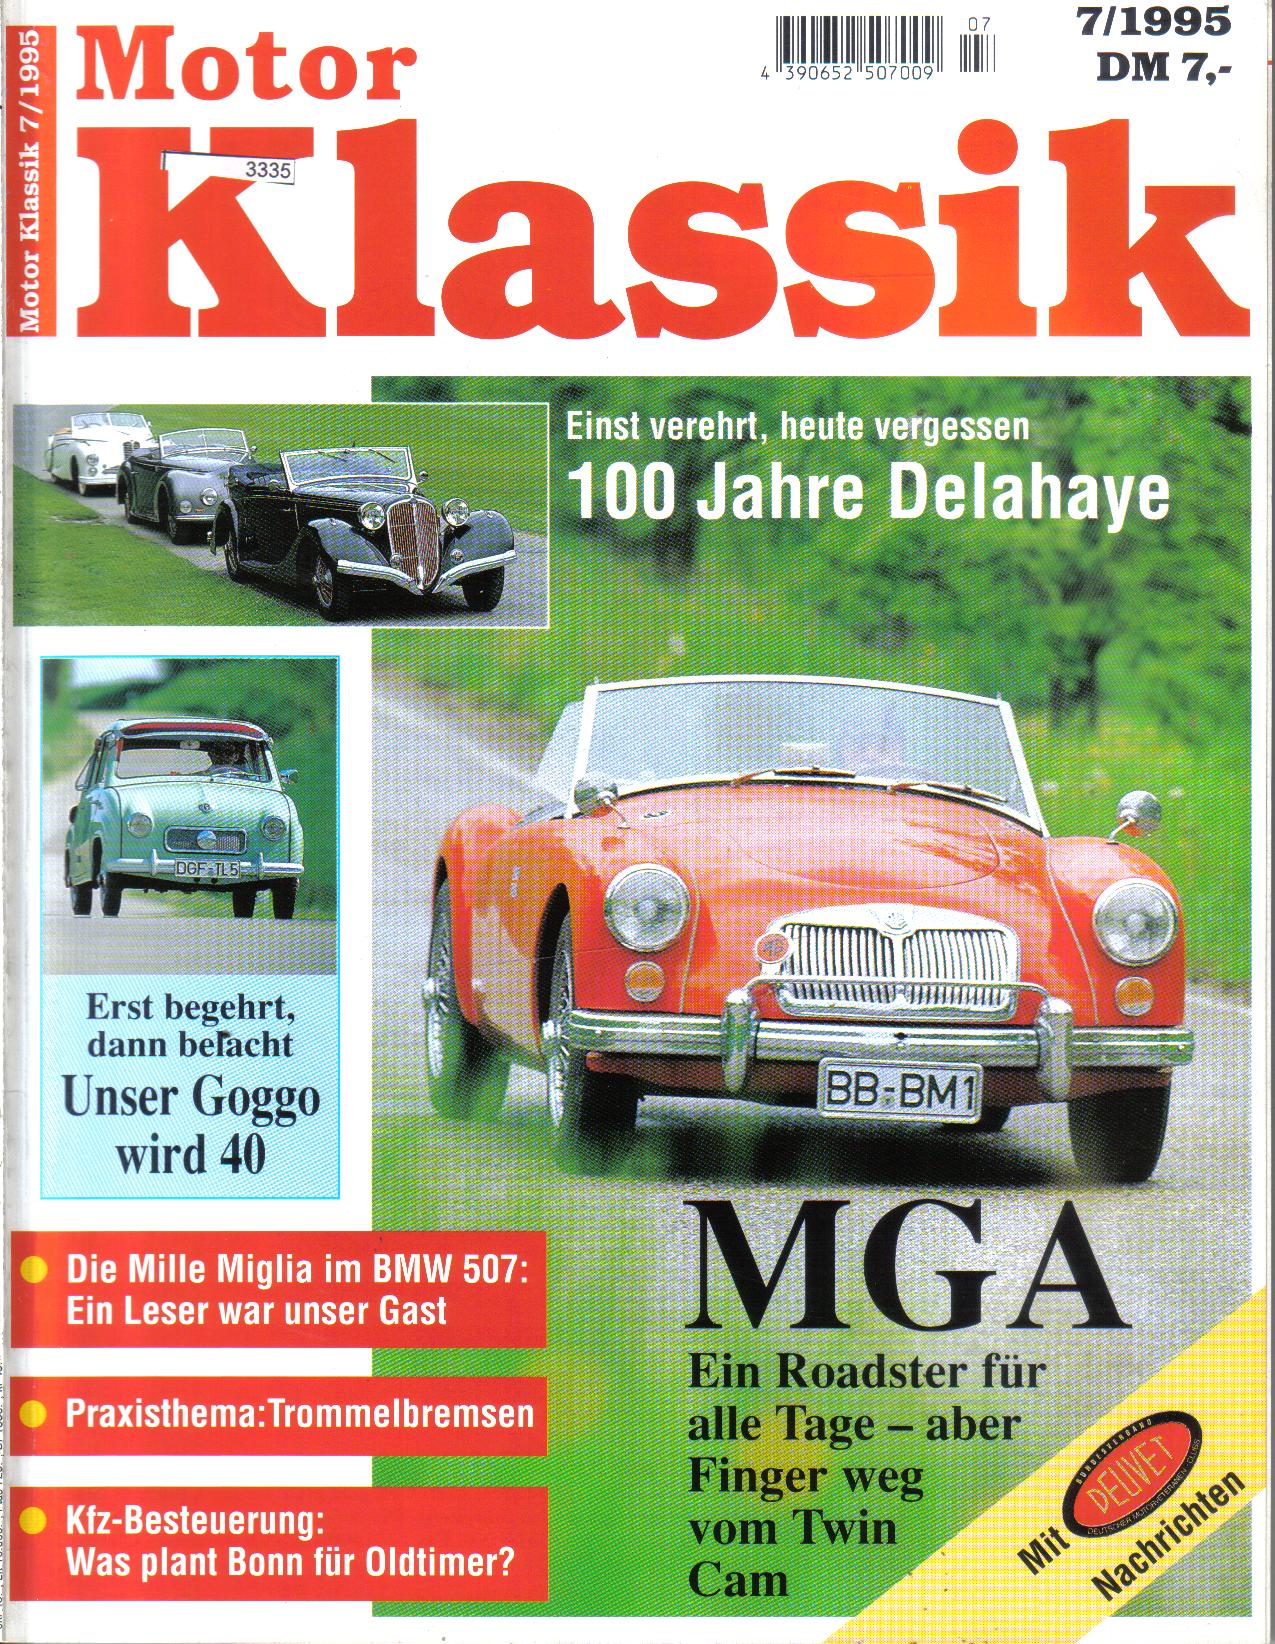 Motor Klassik  07/95